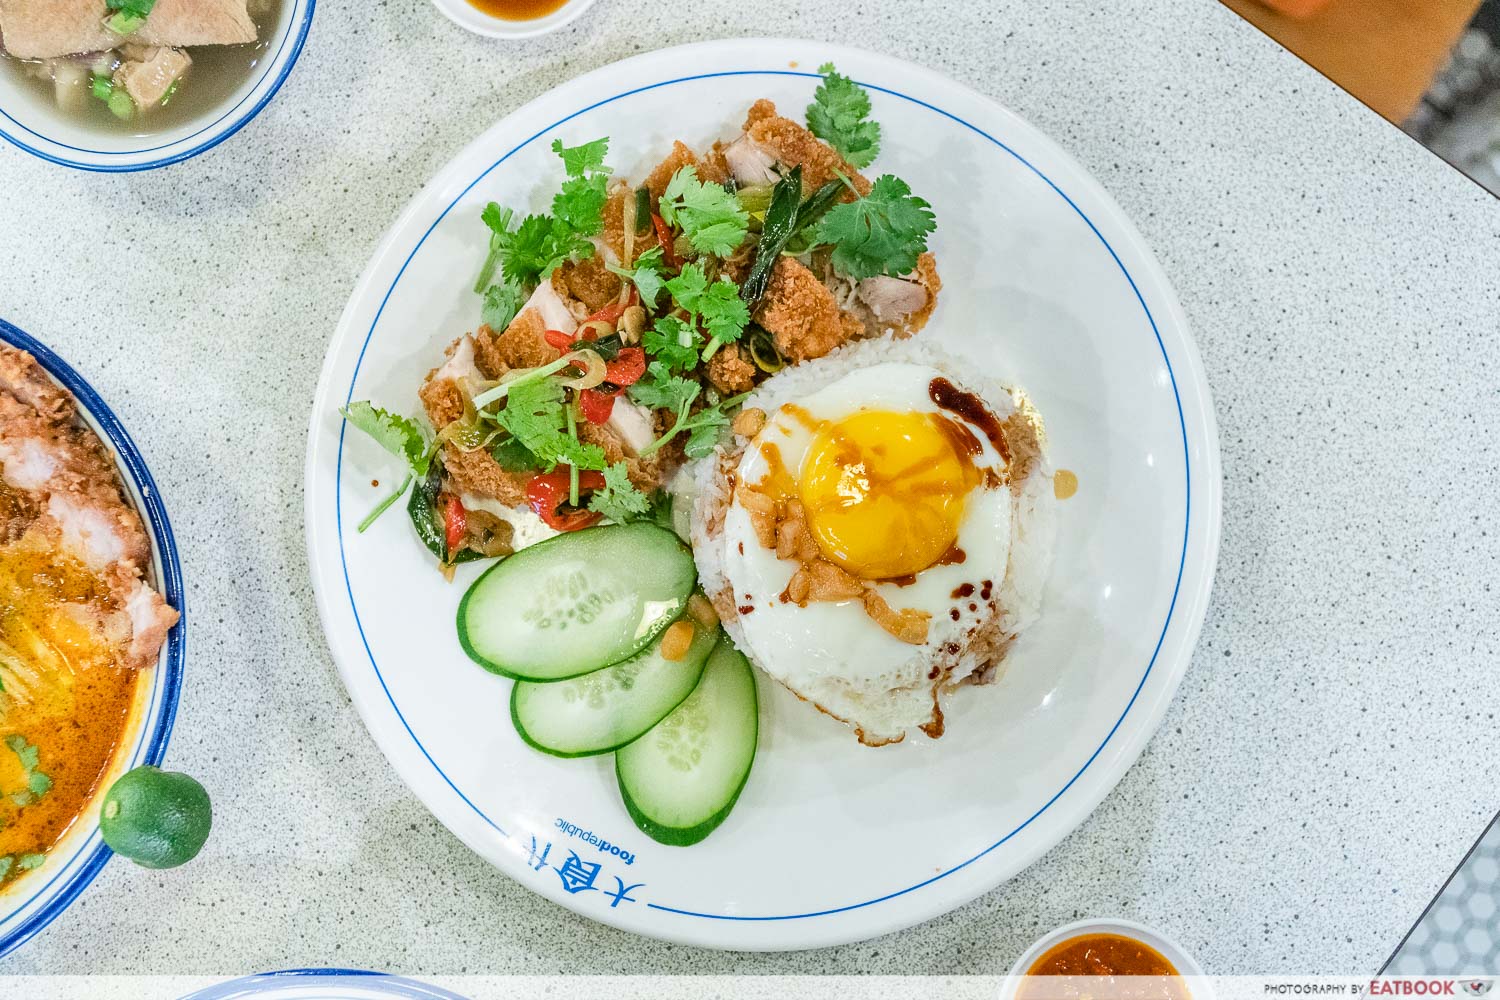 Ah Yen Traditional Fried Pork - Salt & Pepper Chicken rice with egg